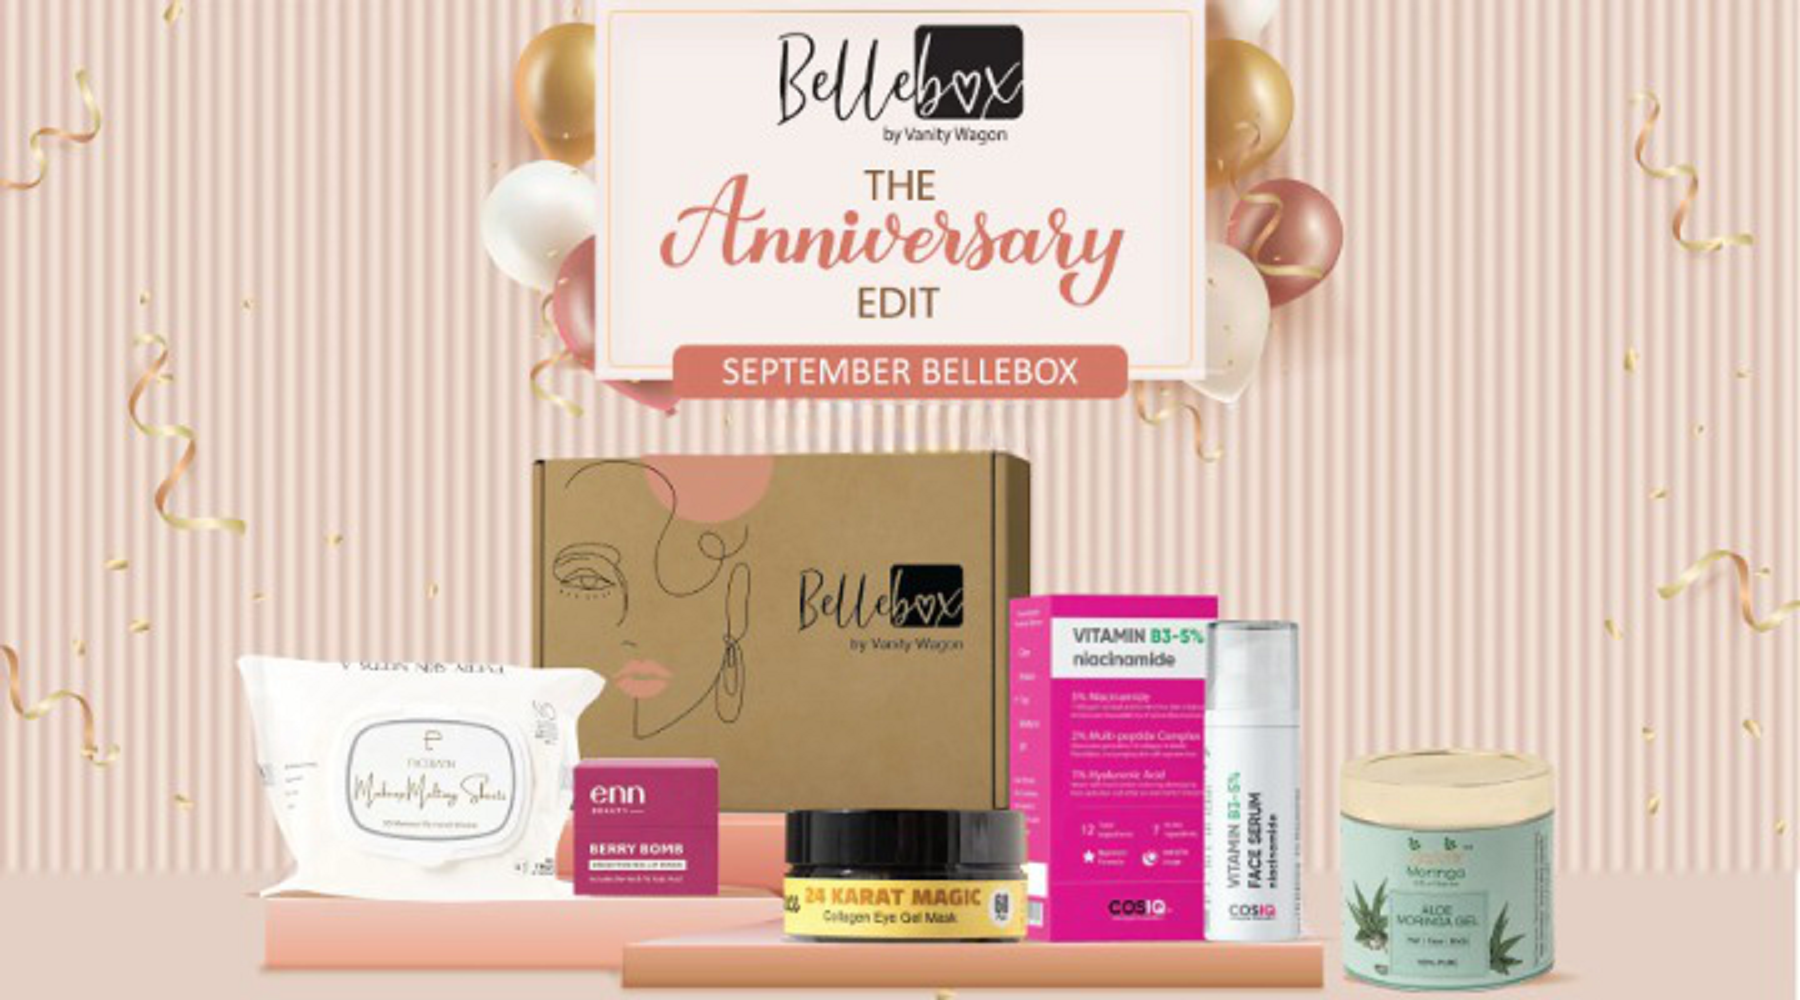 September Bellebox: Anniversary Celebration Edit